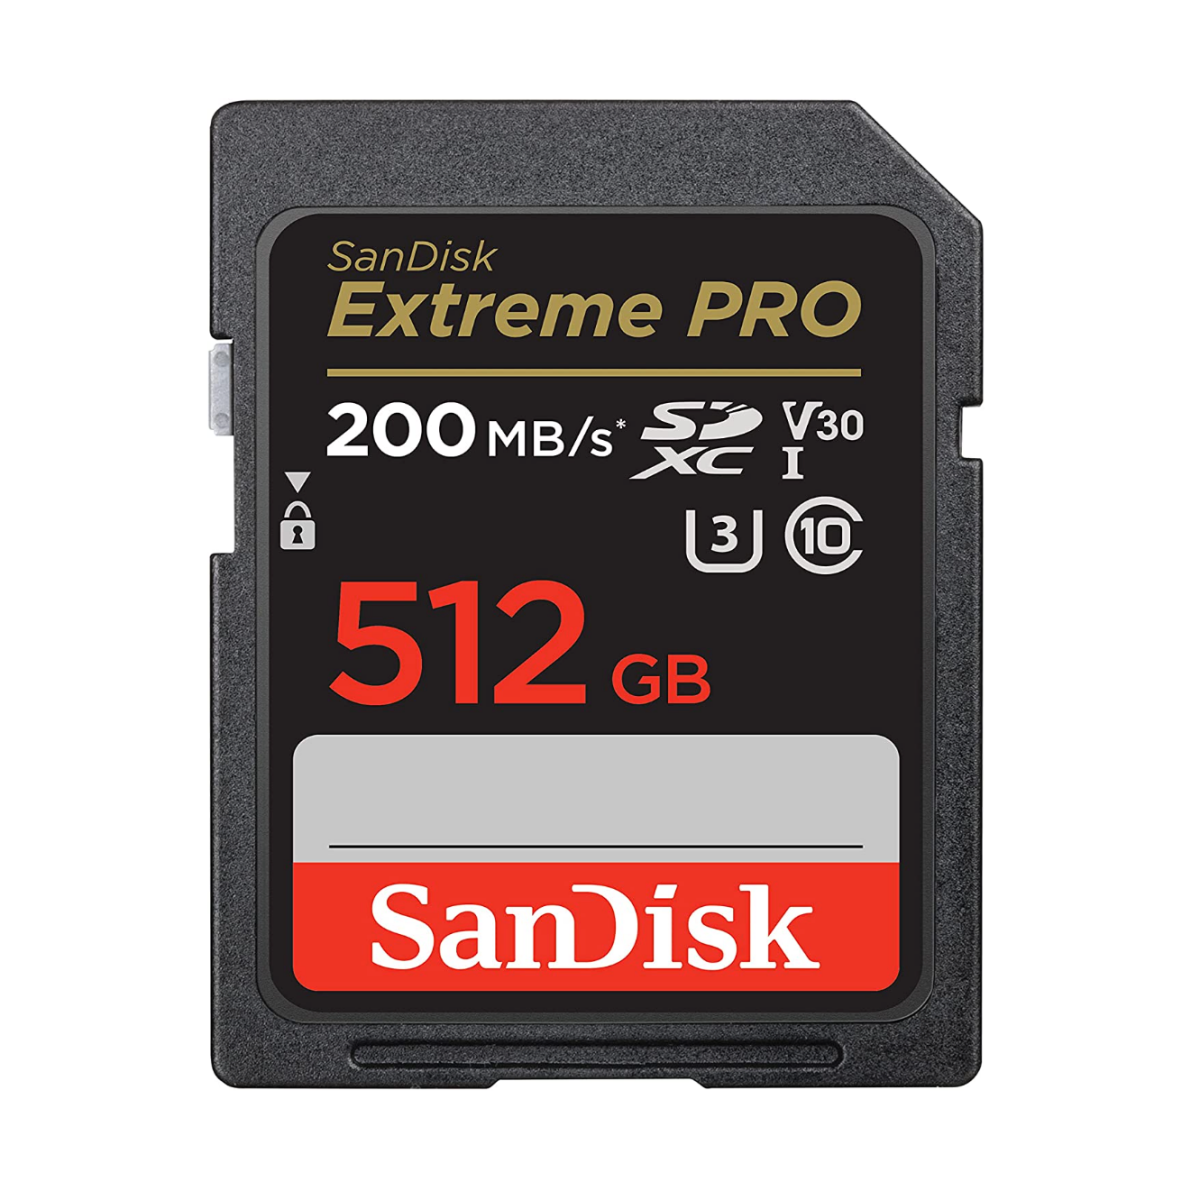 A 512GB SanDisk Extreme PRO UHS-I SDXC memory card